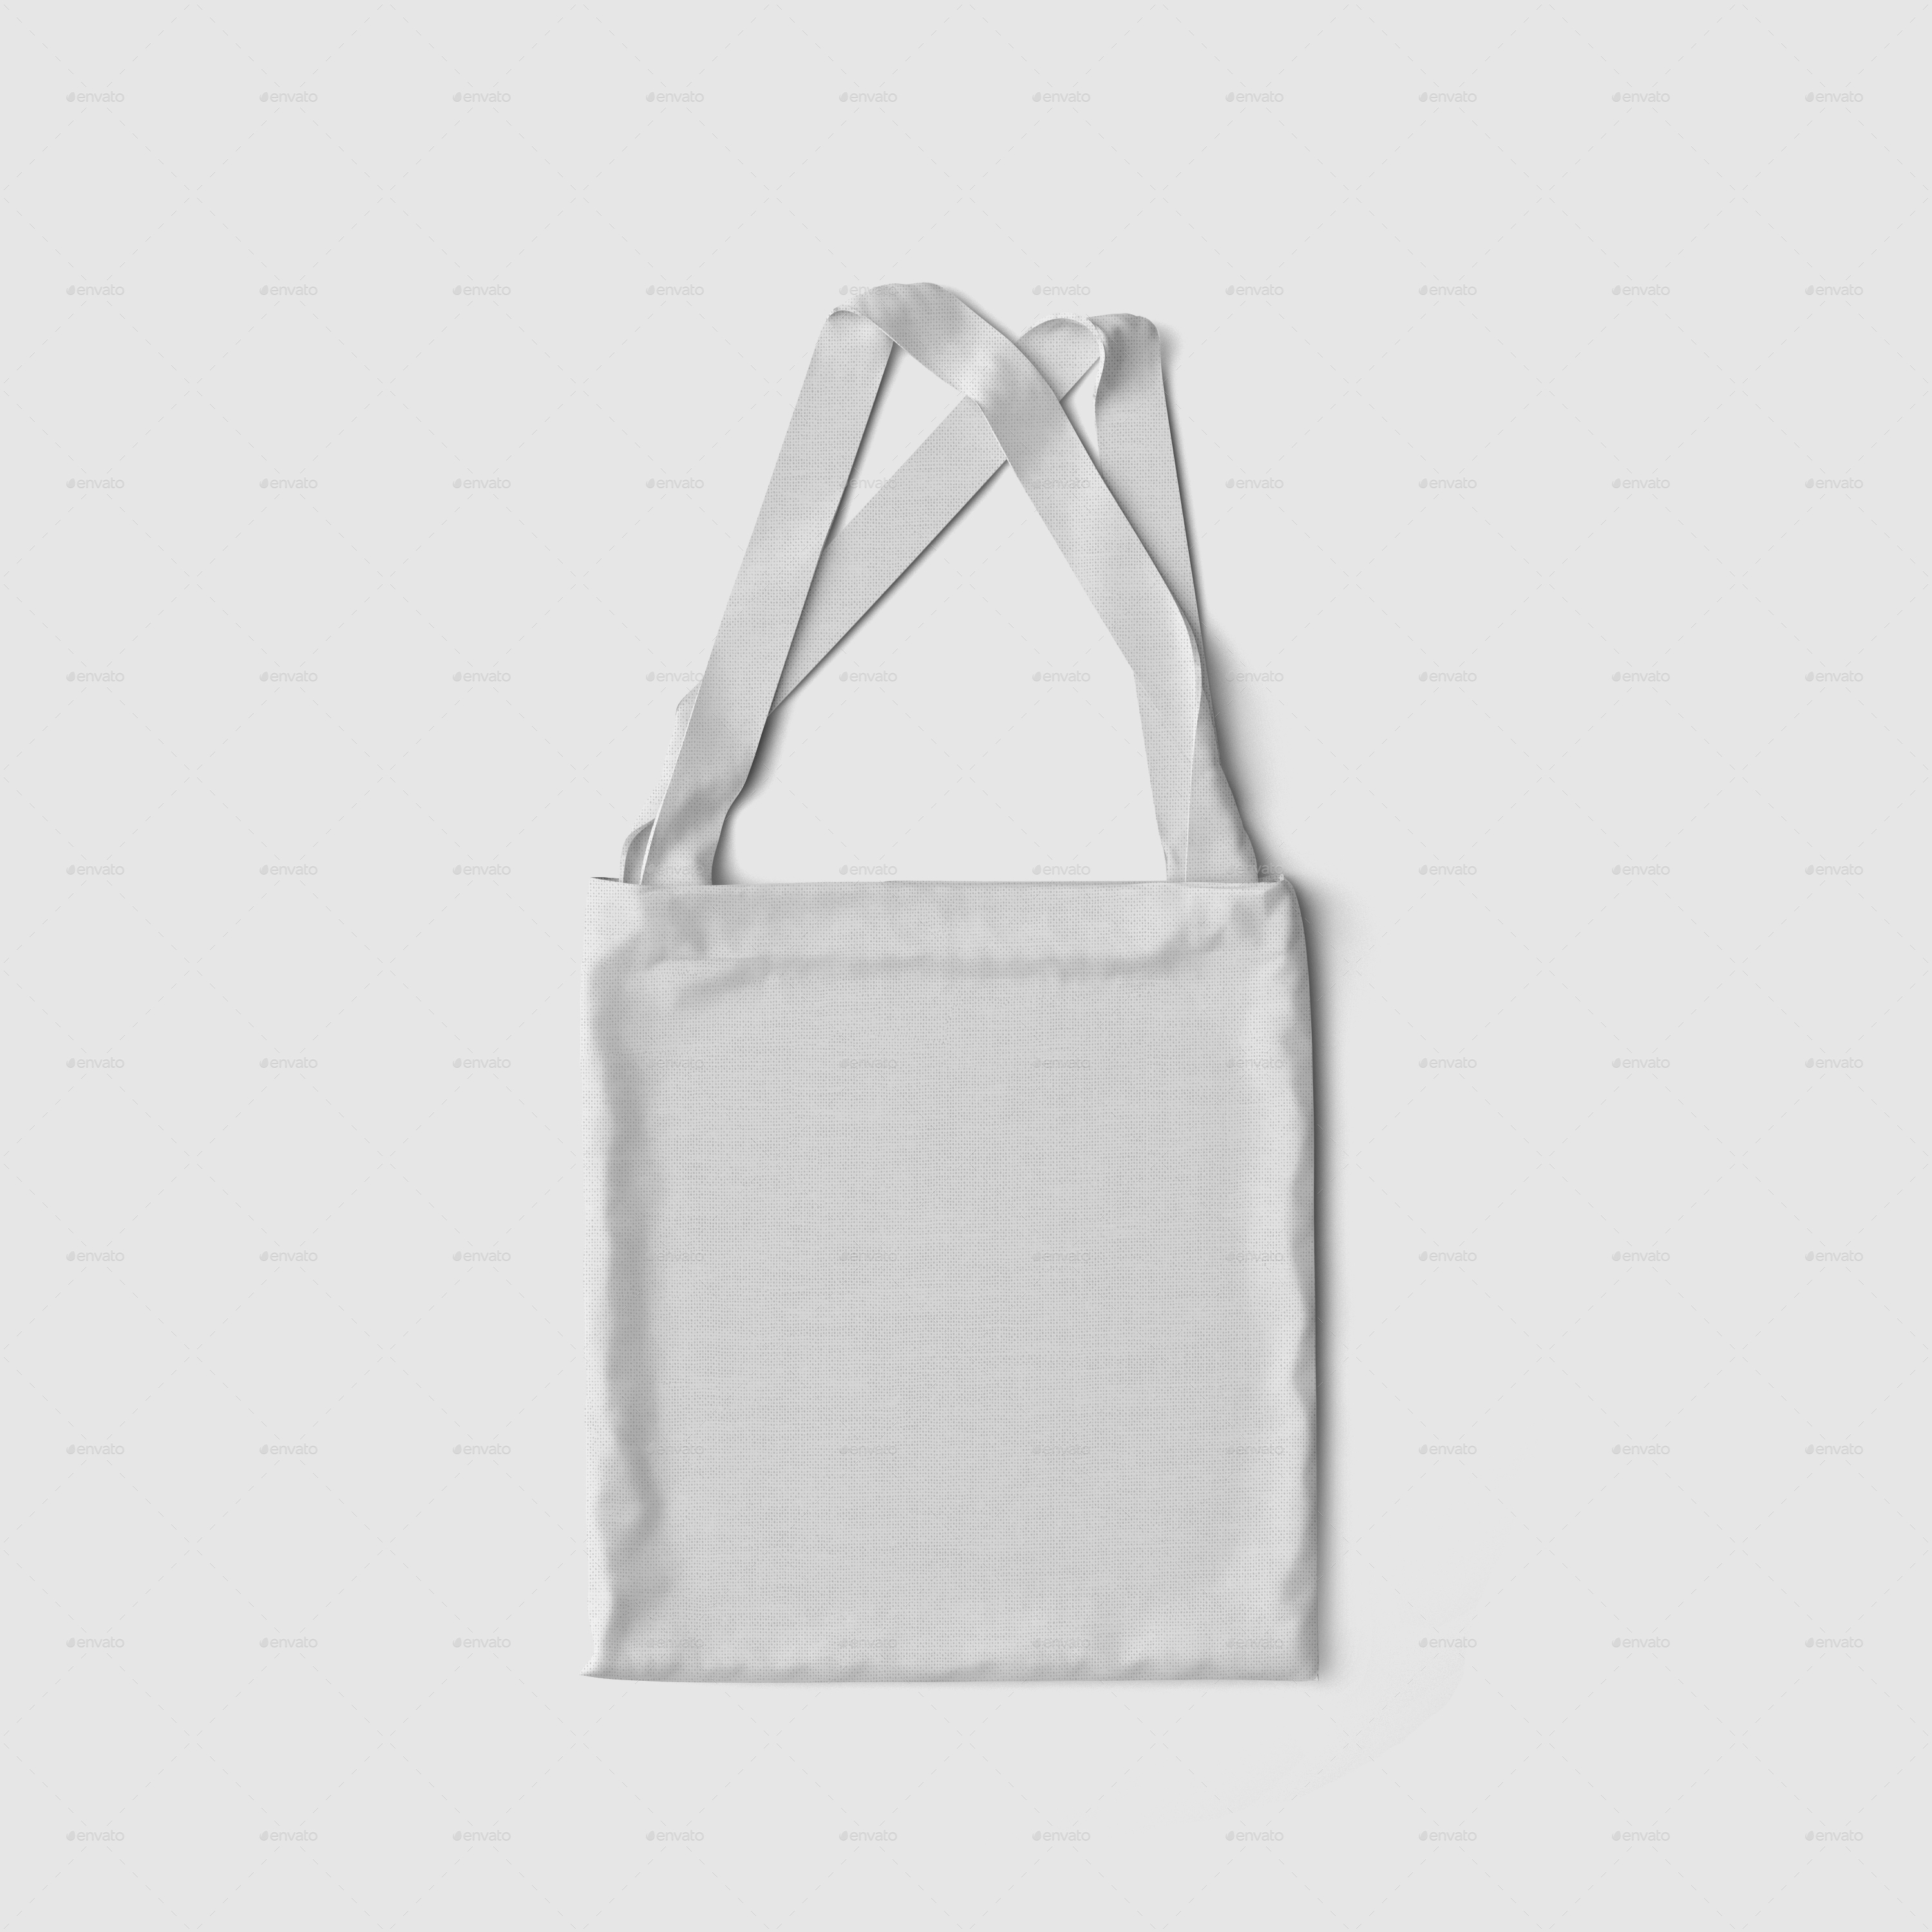 Fabric Bag Mockup by PixellandStore | GraphicRiver